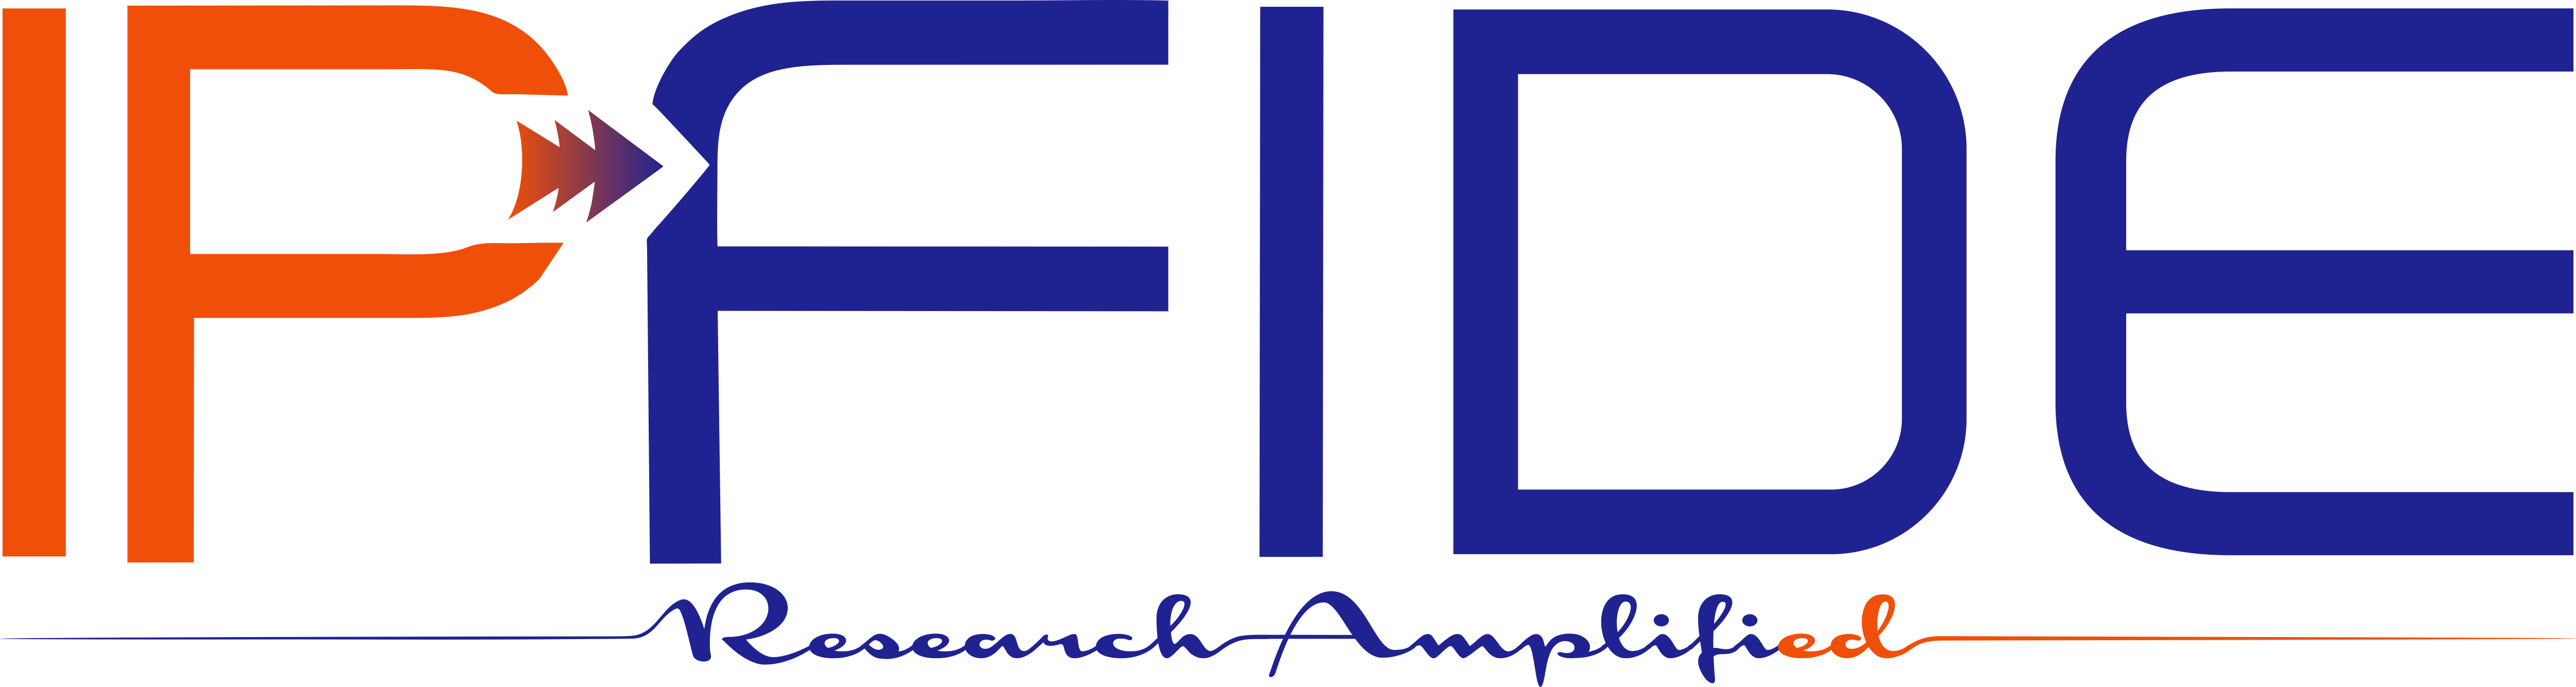 Ipfide Logo